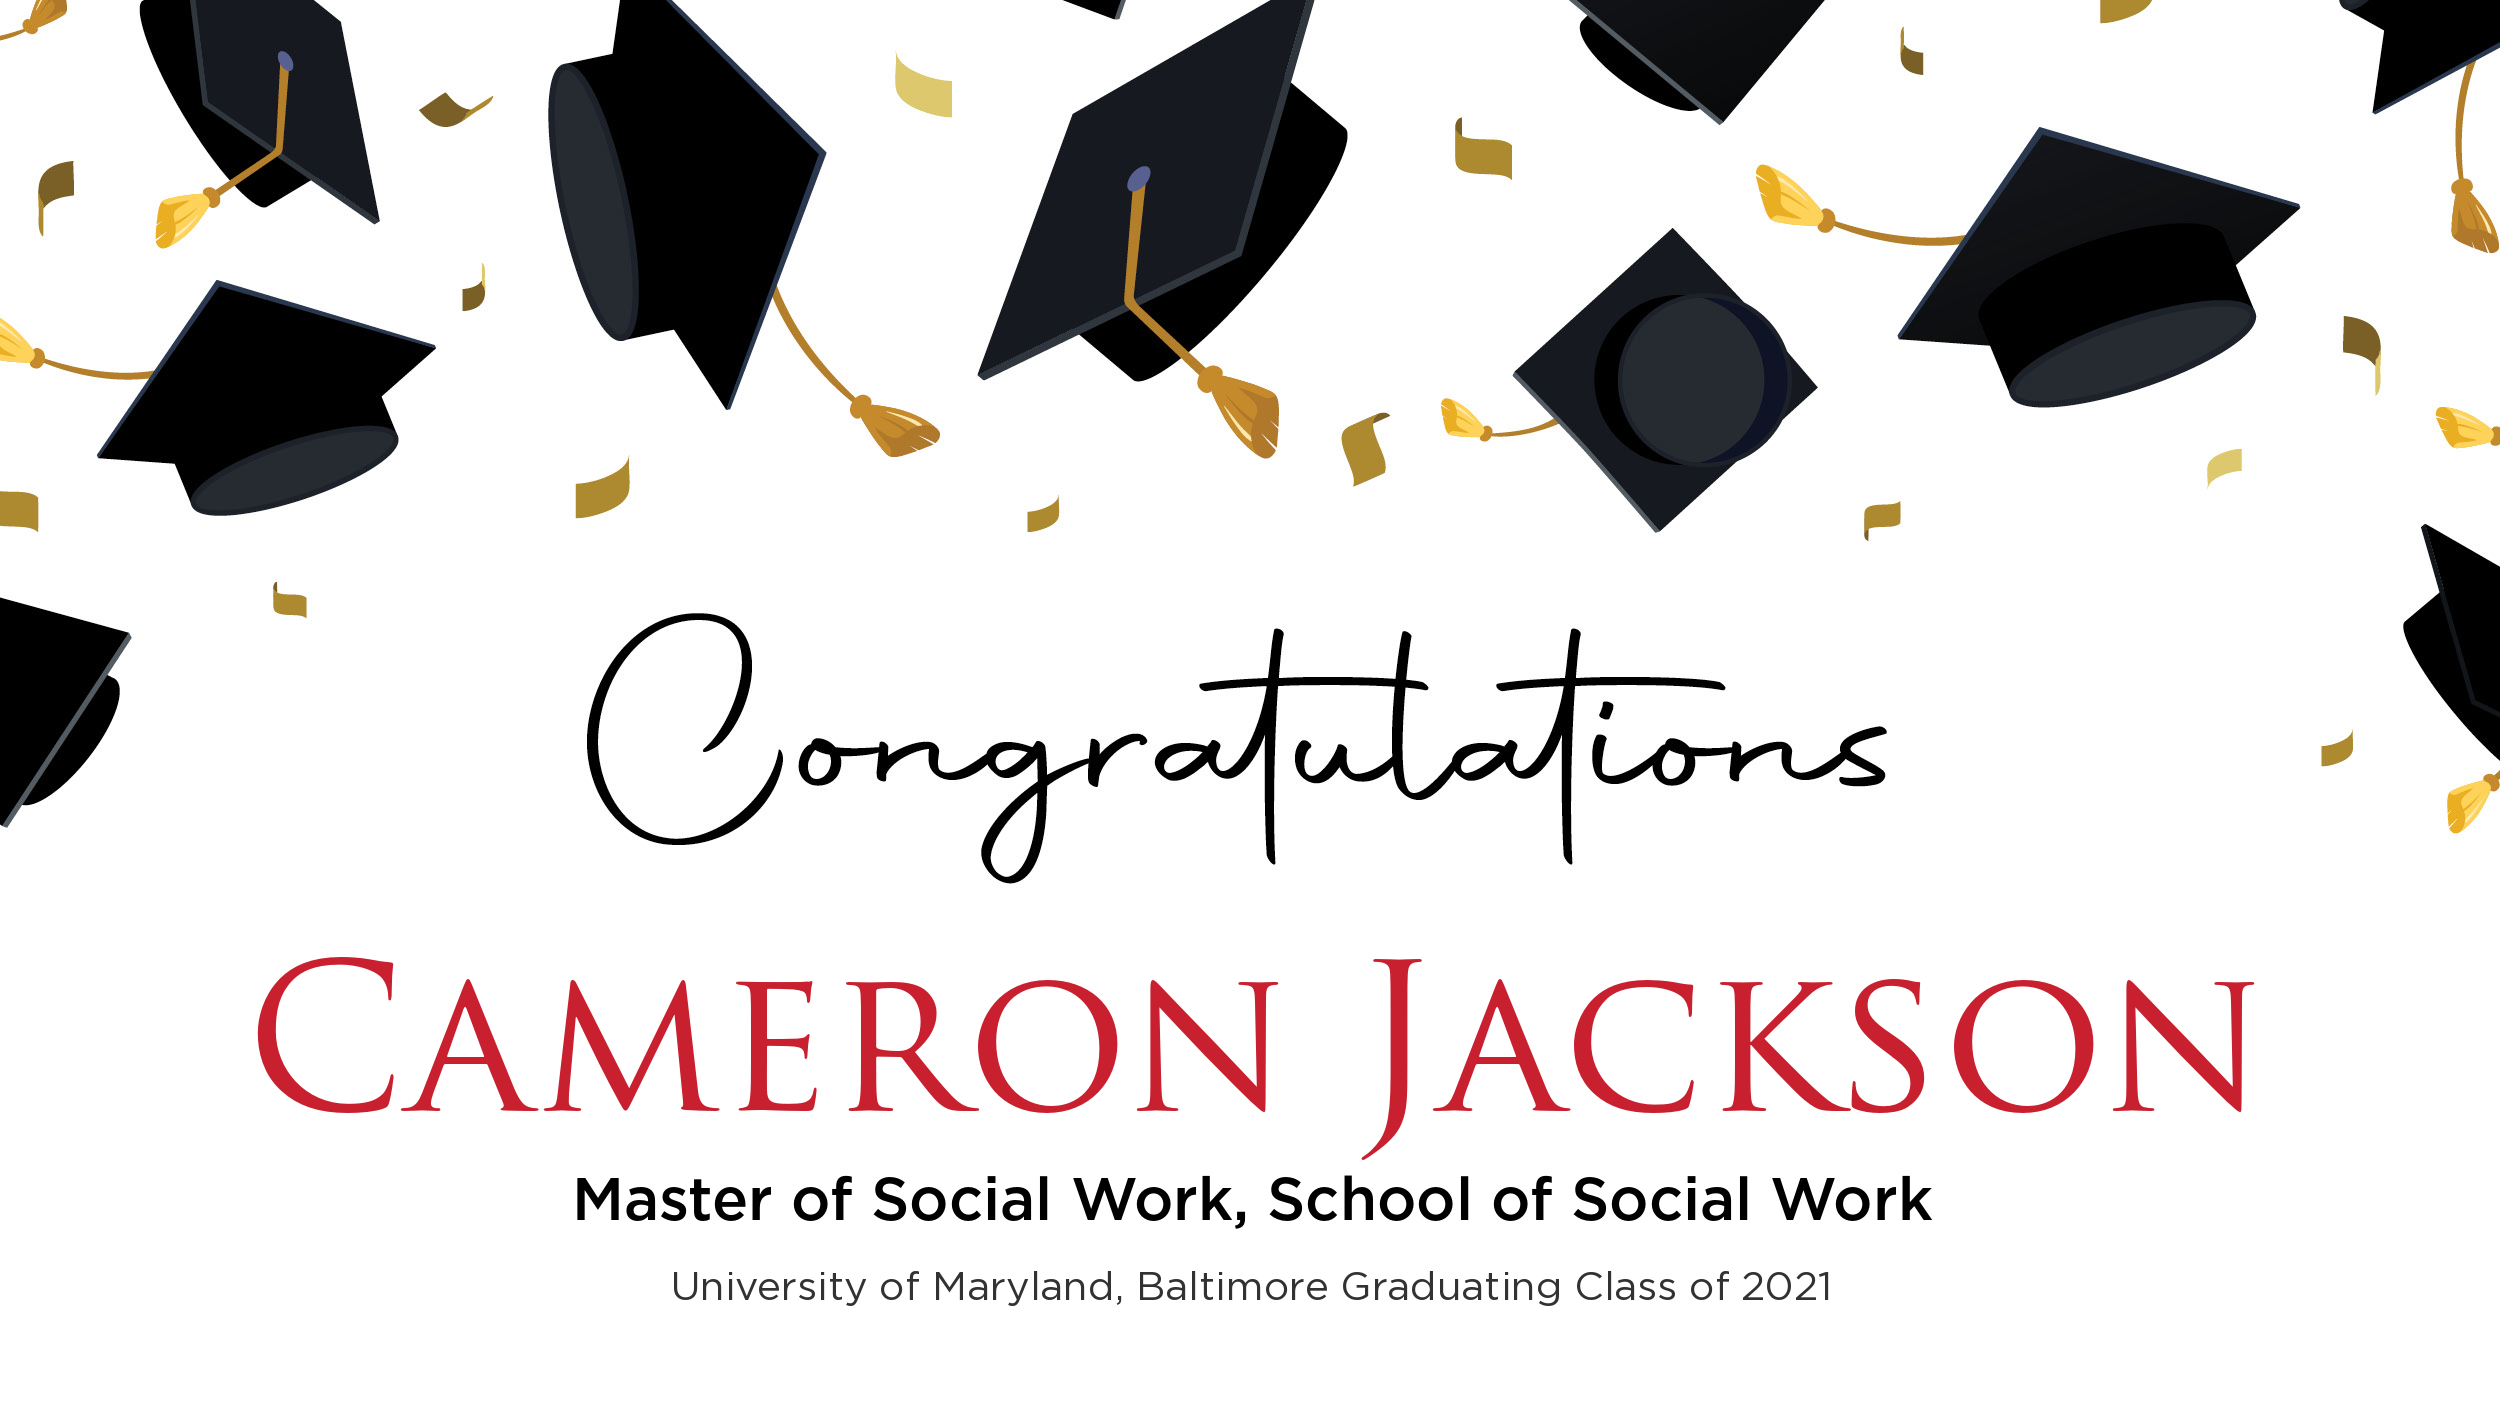 Congratulations Cameron Jackson, Master of Social Work